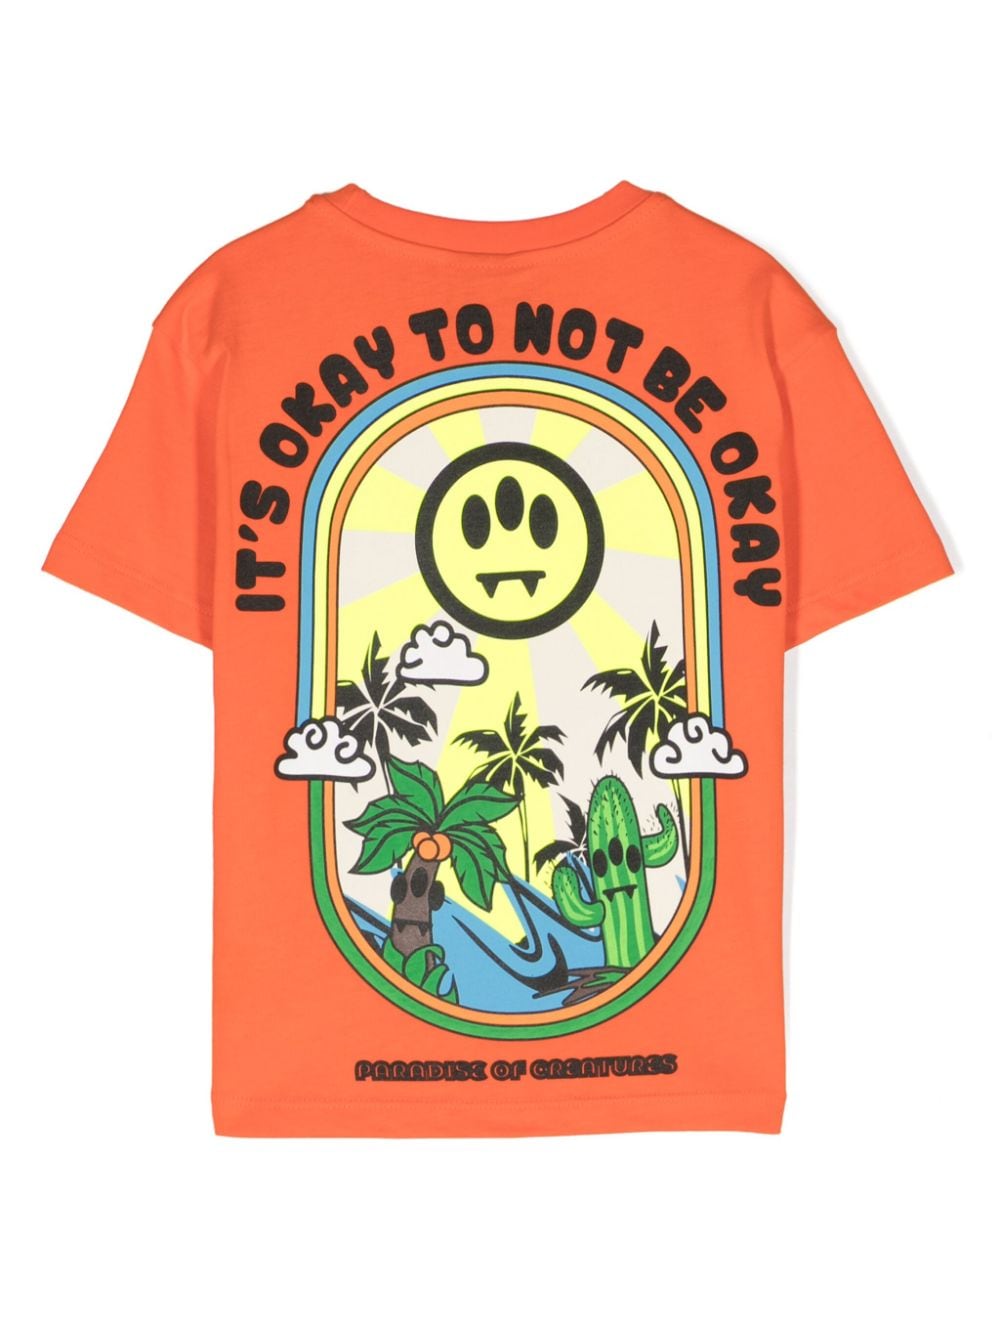 Orange t-shirt for boys with logo